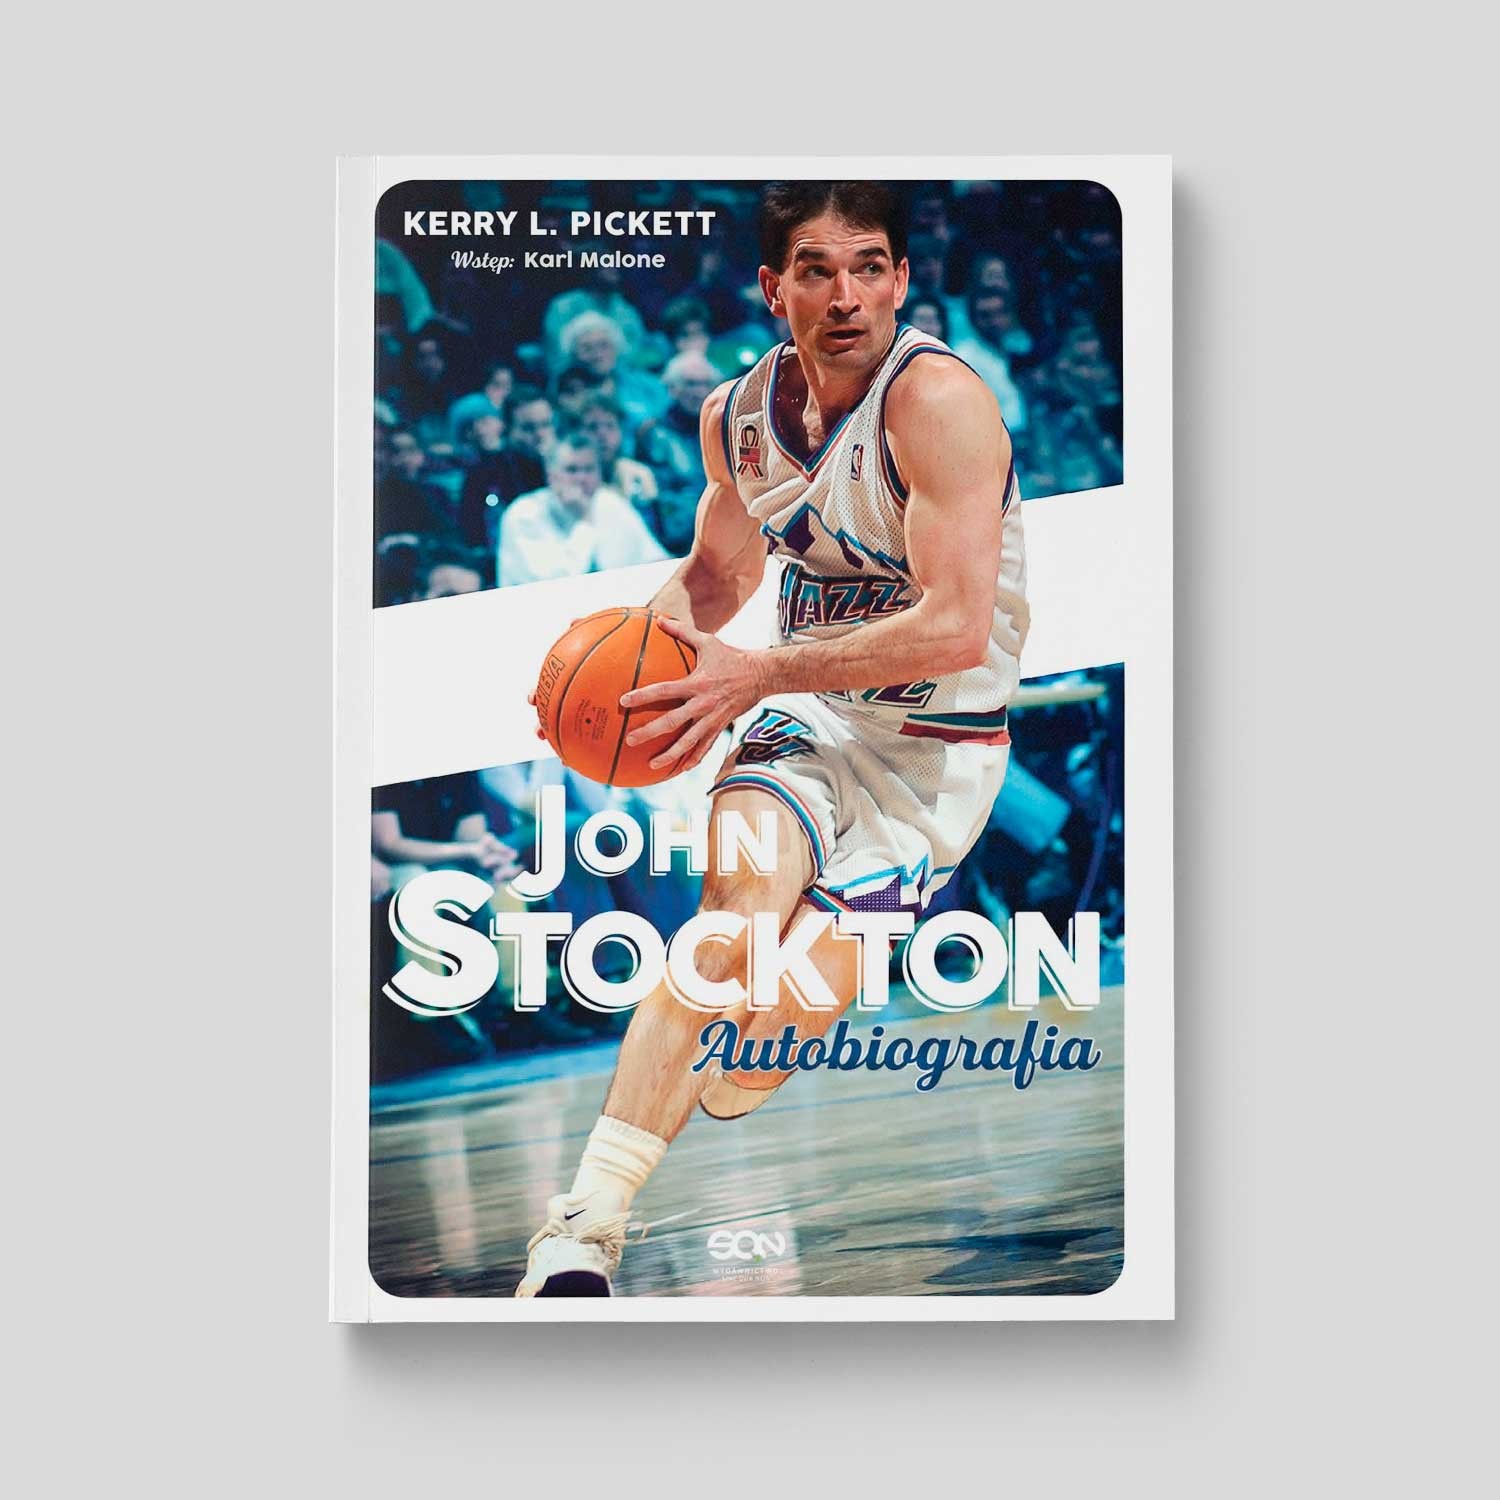 Okładka:John Stockton. Autobiografia 